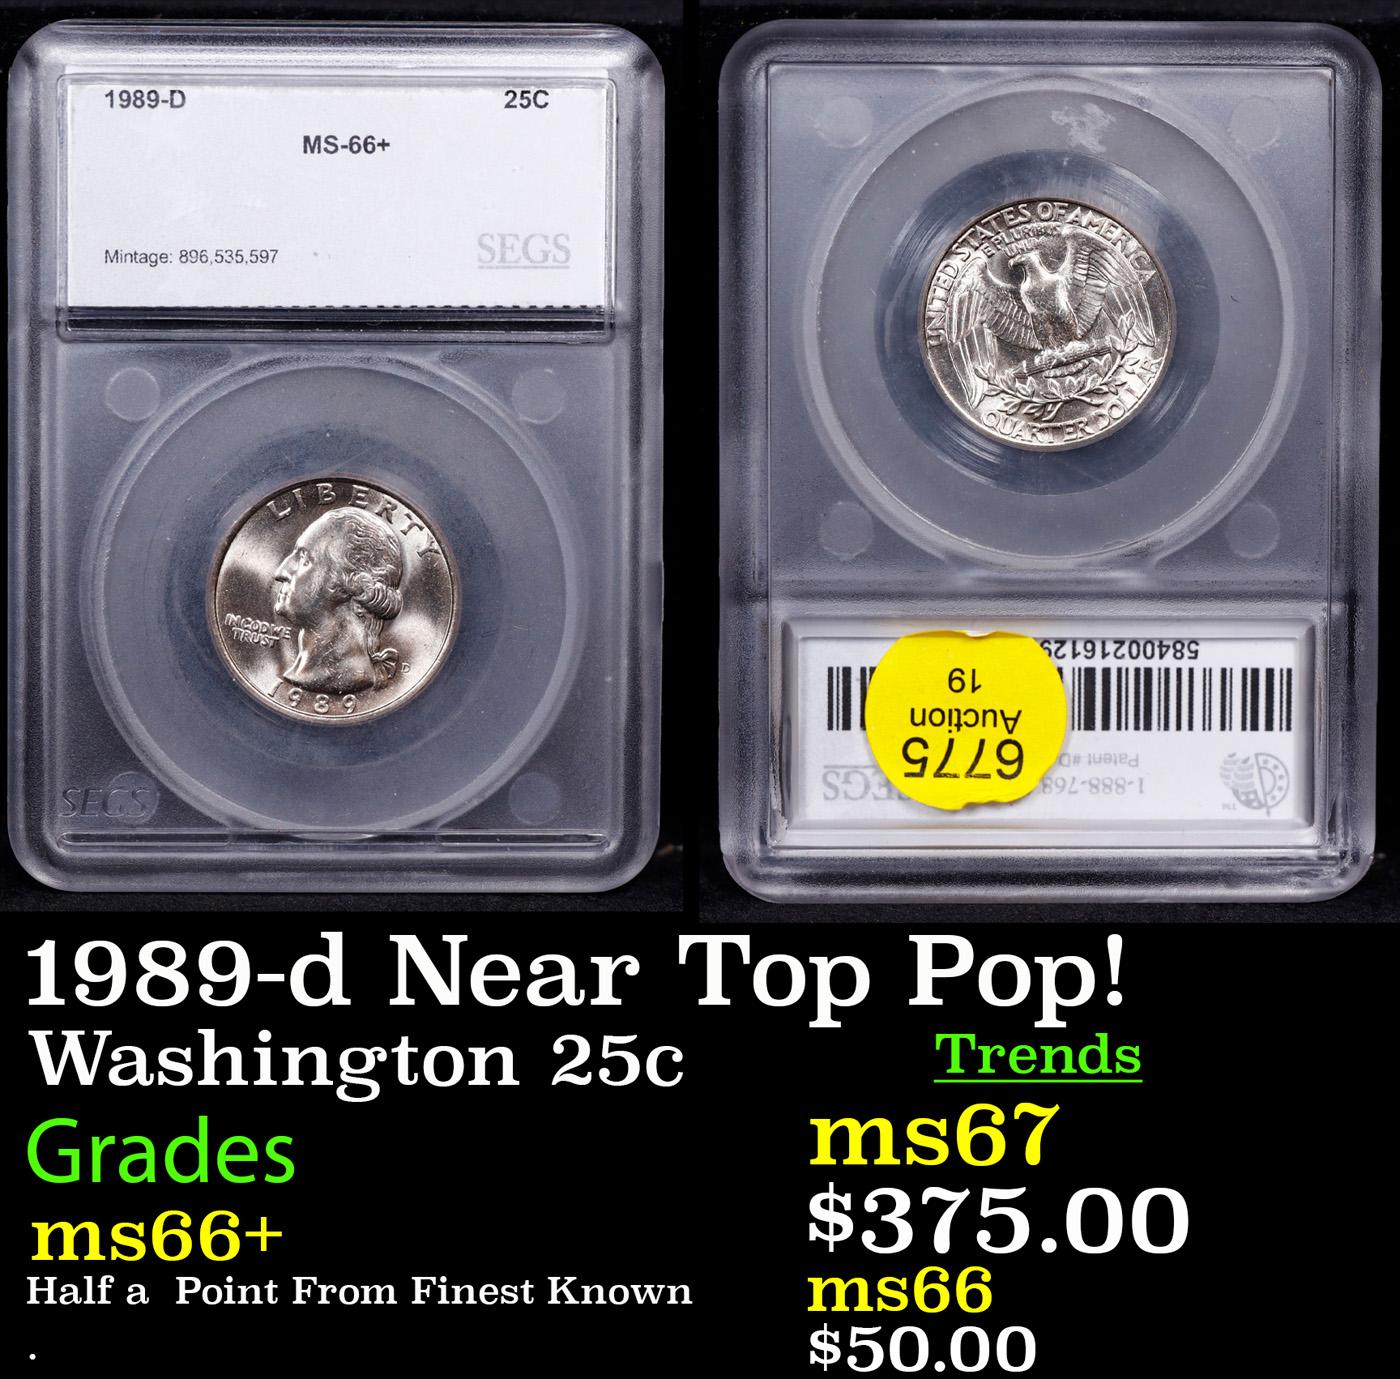 1989-d Washington Quarter 25c Graded ms66+ By SEGS